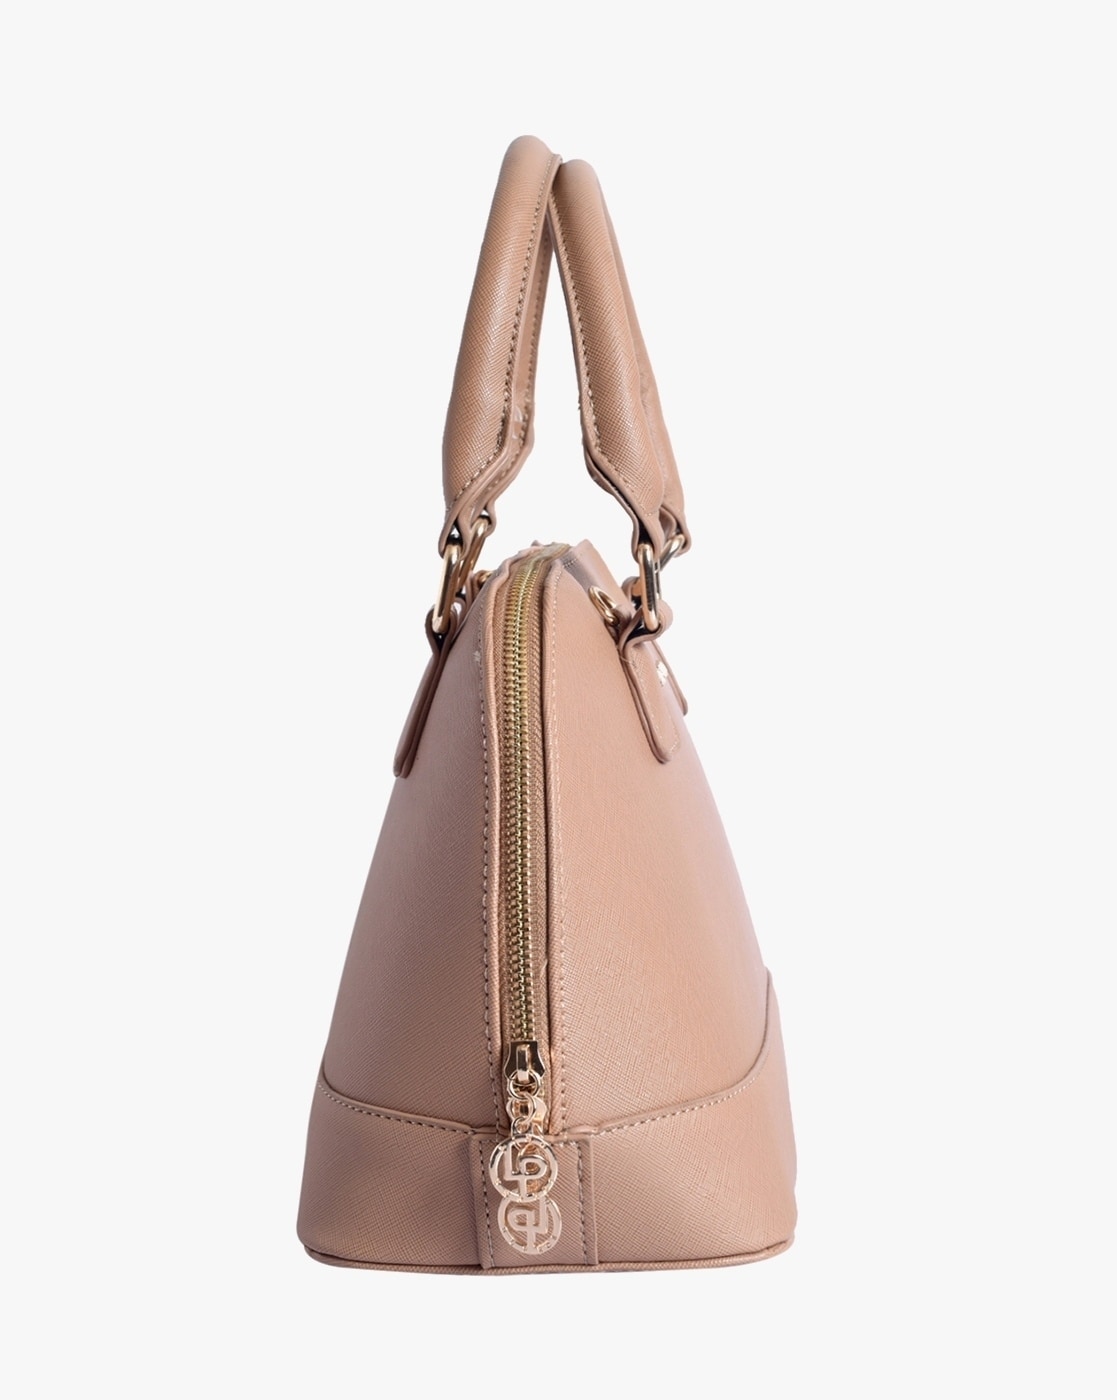 Buy Womanix PU Elegant beige satchel, beige handbag, Ladies purse handbag  (0026) at Amazon.in